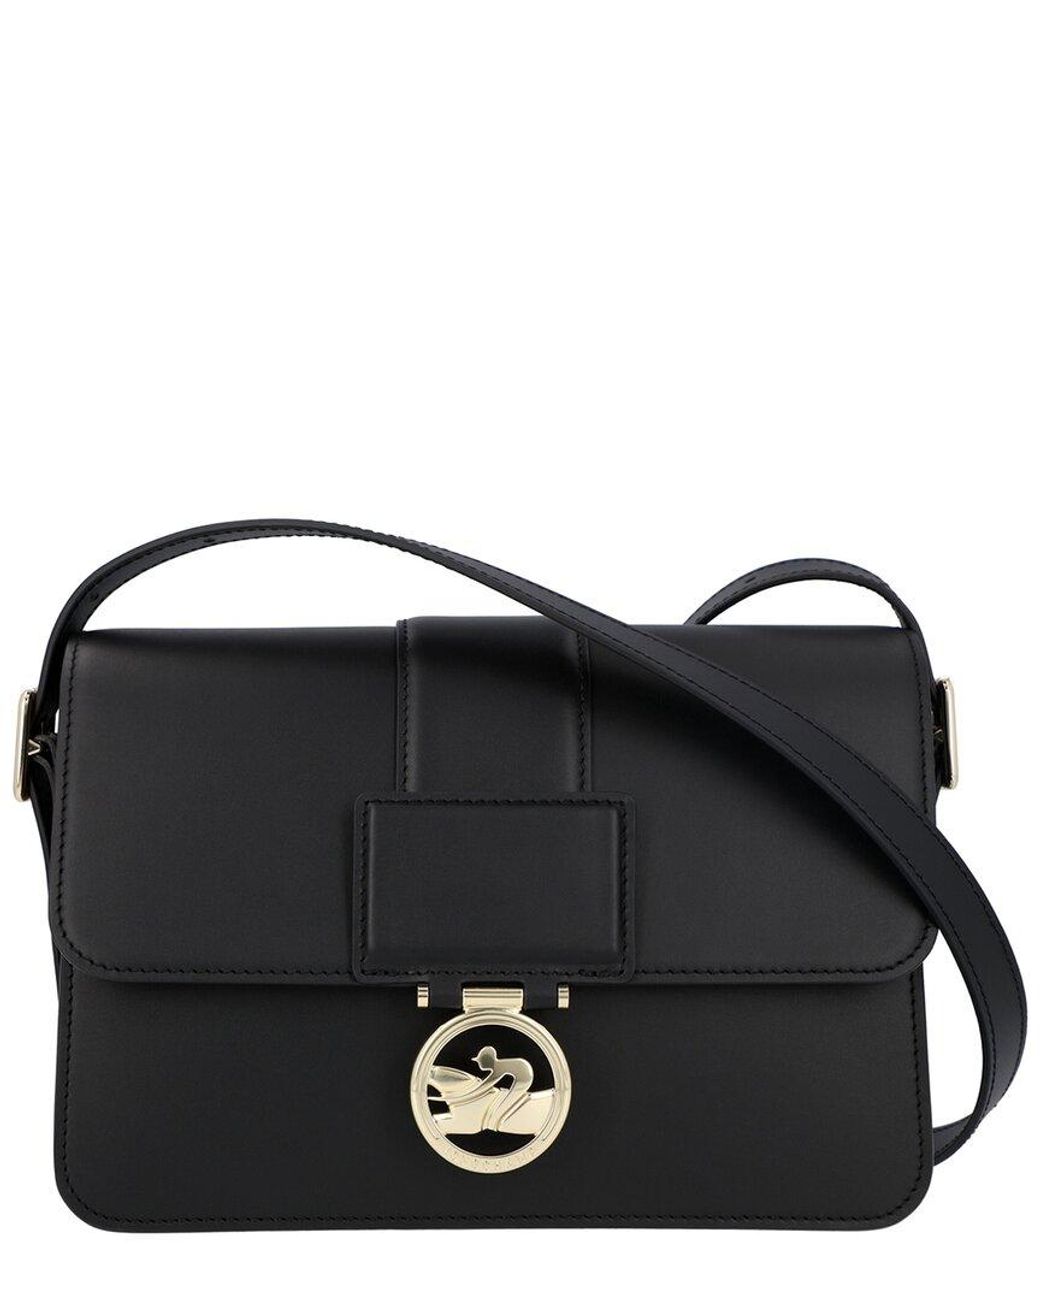 Longchamp Box-trot Leather Shoulder Bag in Black | Lyst